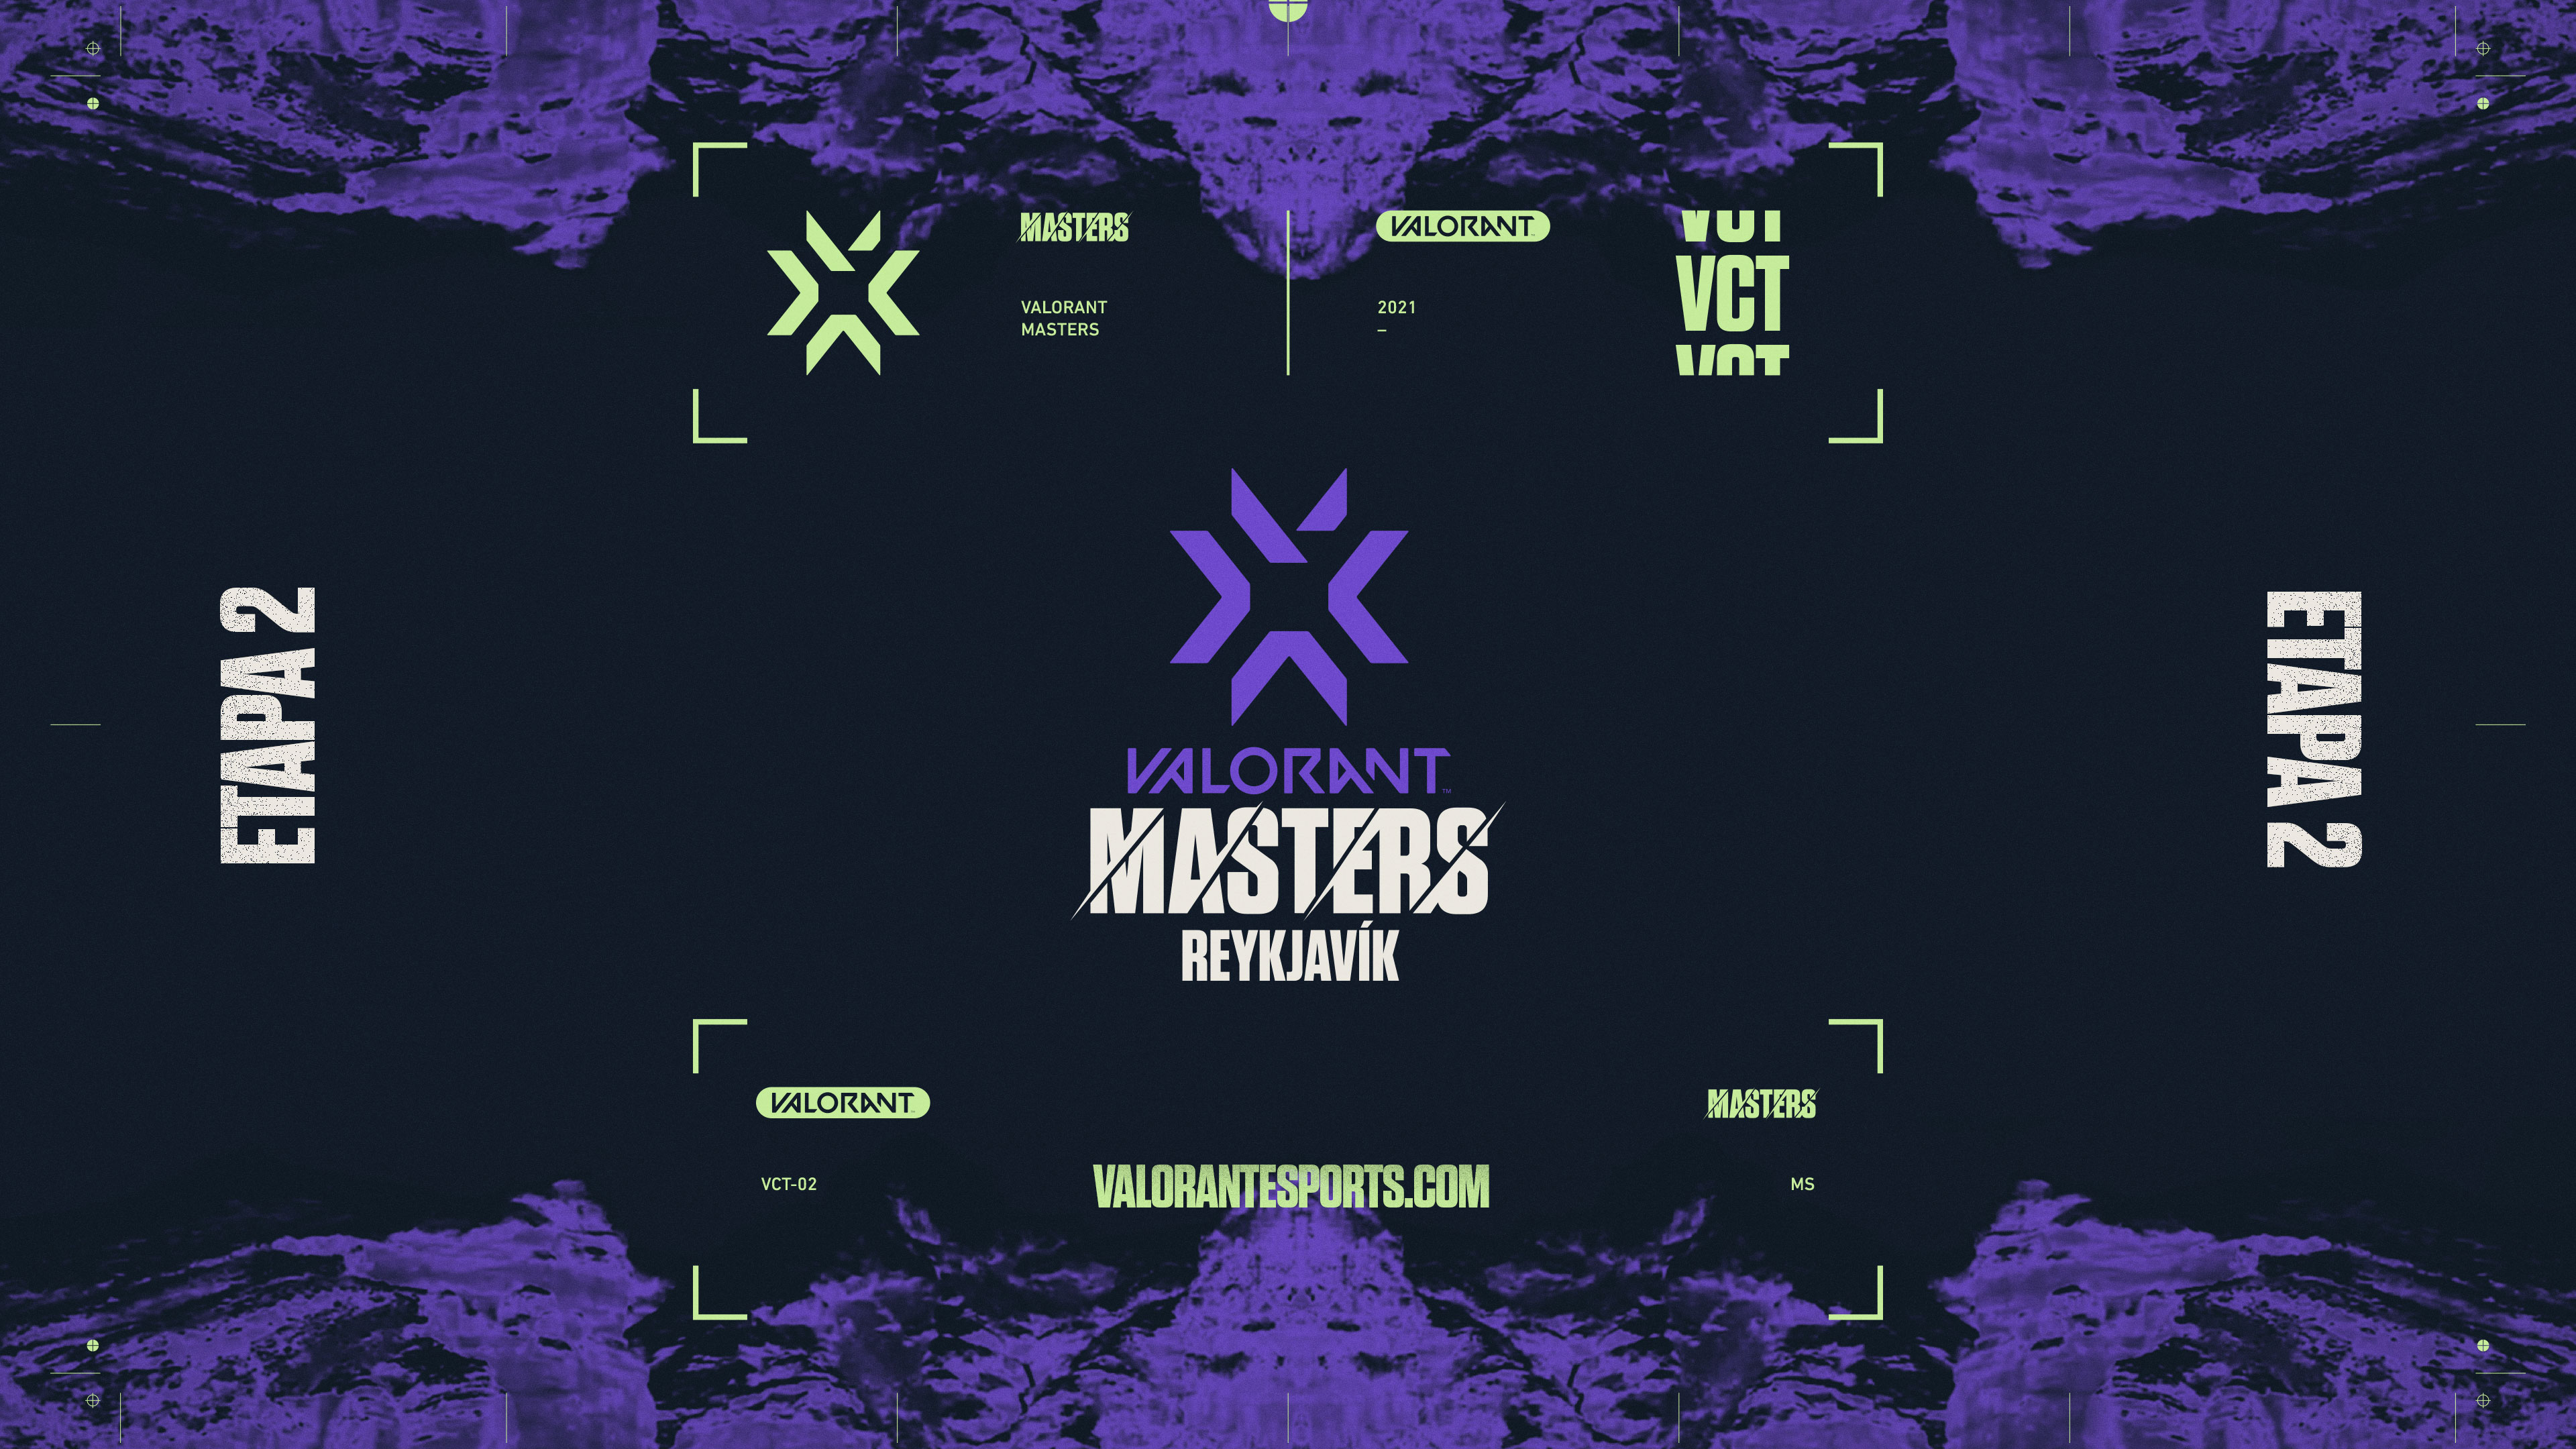 22 masters. Valorant Masters Reykjavik. VCT Masters Reykjavík. VCT Masters Reykjavík 2021. Valorant Masters Reykjavik 2022.